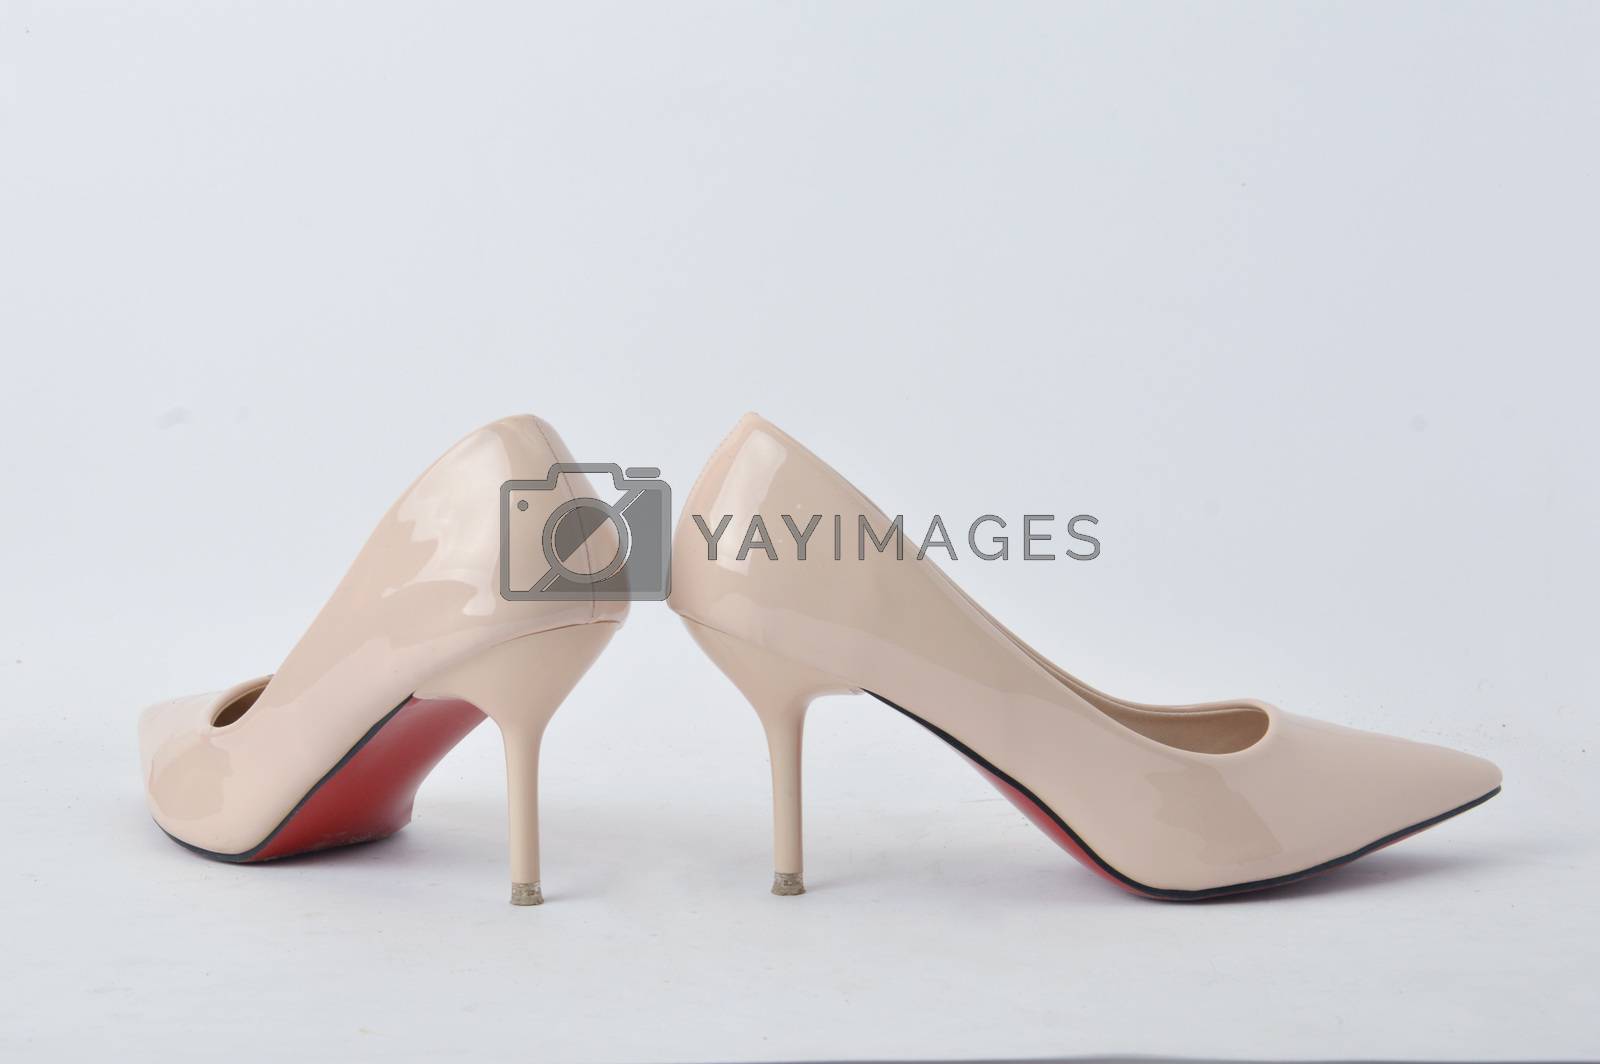 Royalty free image of high heel shoes by antonihalim